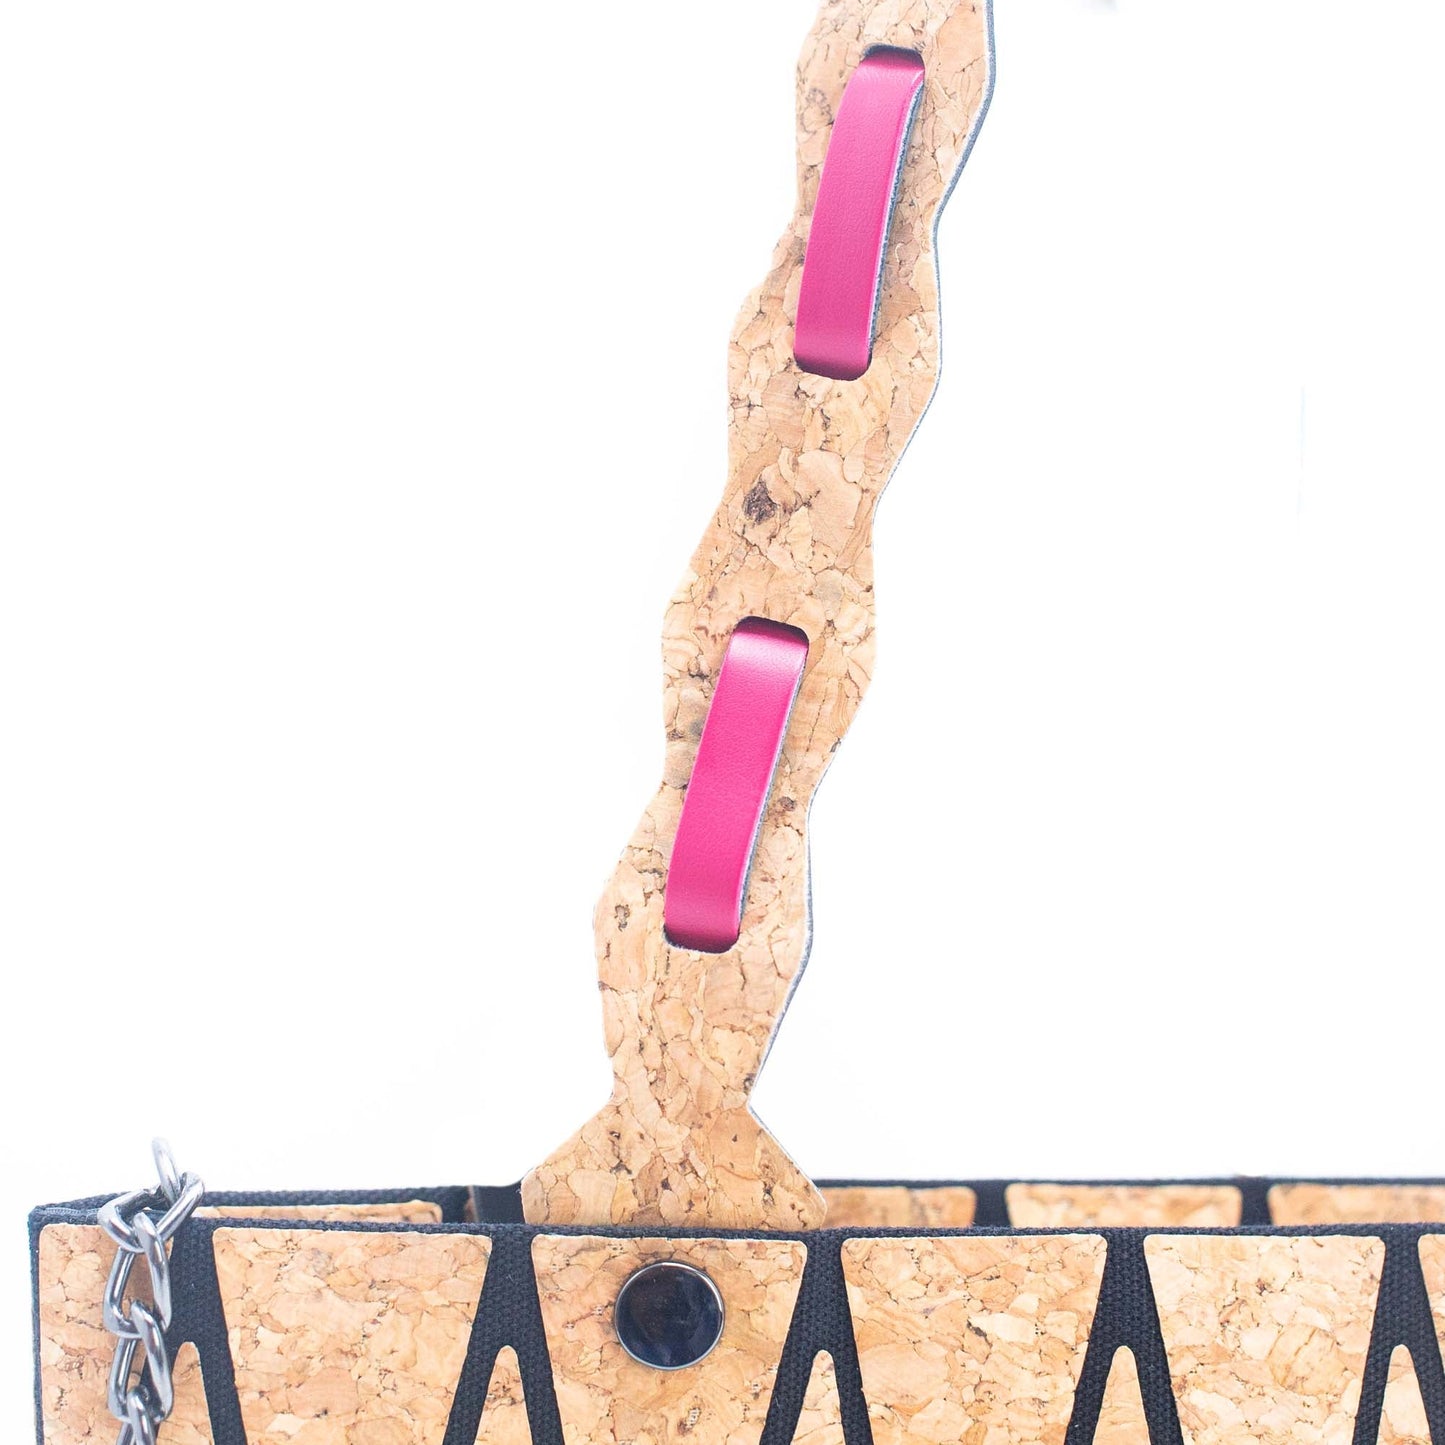 Pink, Black & Lake Blue Natural Cork Geometric Handbags | THE CORK COLLECTION